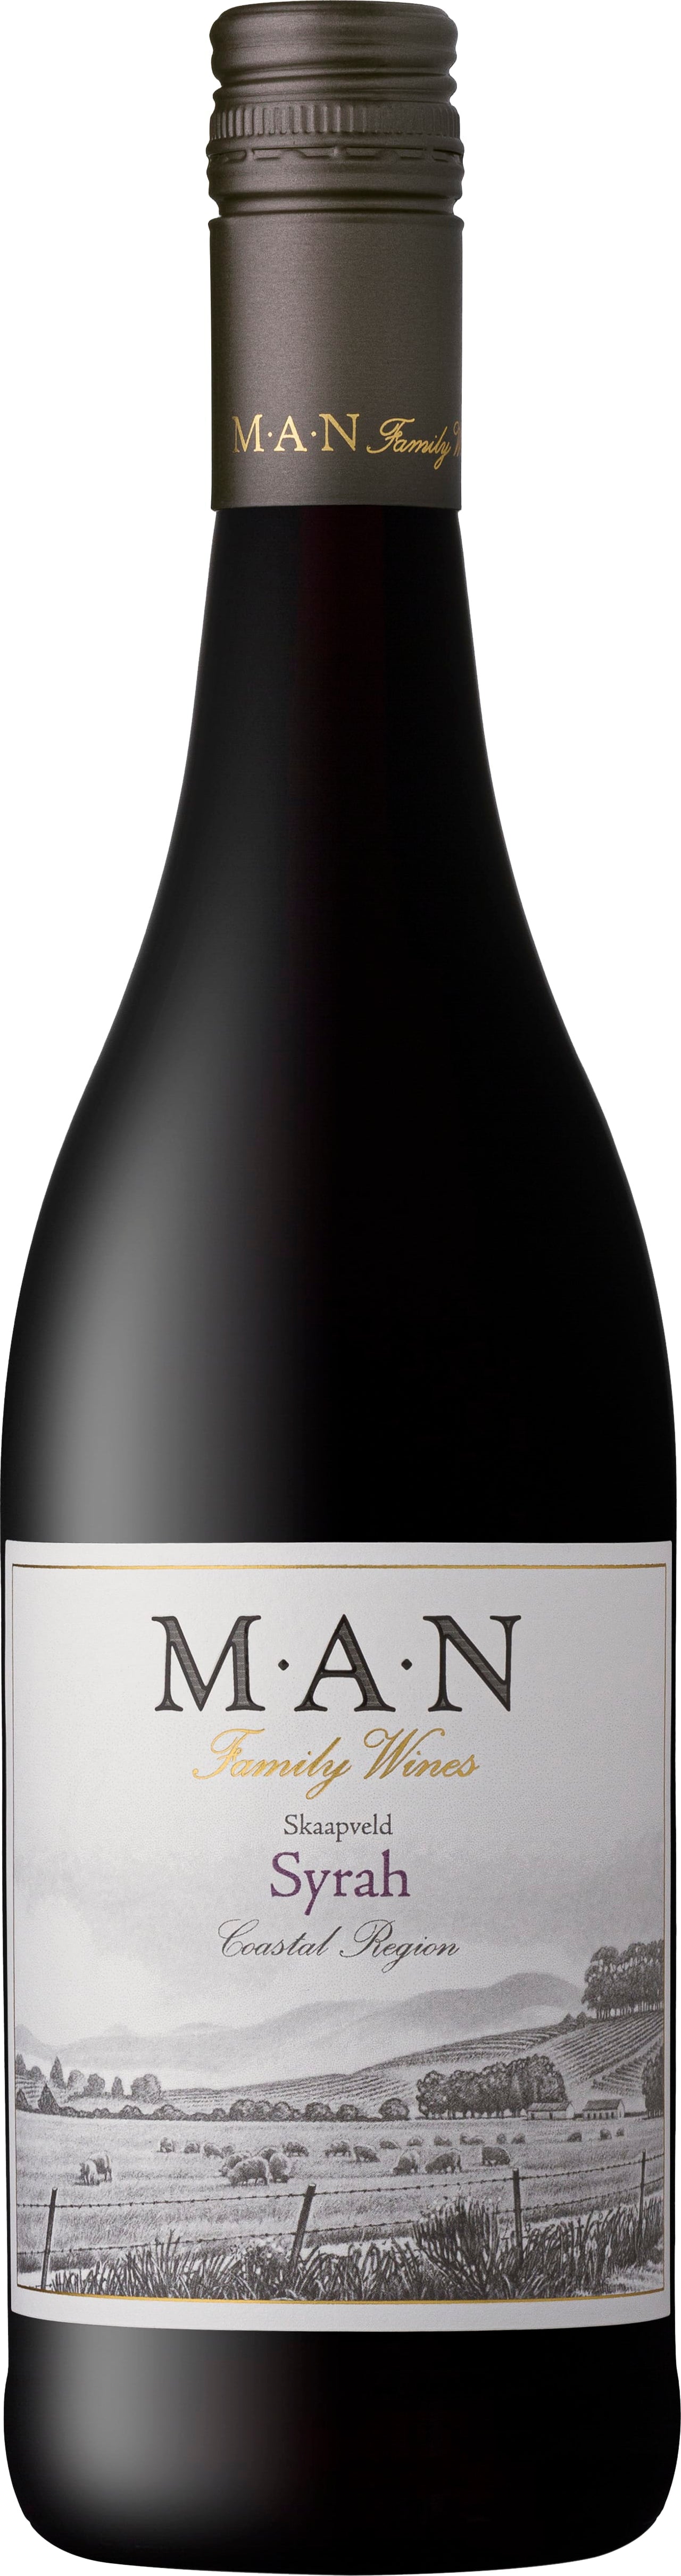 MAN Family Wines Skaapveld Syrah 2021 75cl - Buy MAN Family Wines Wines from GREAT WINES DIRECT wine shop